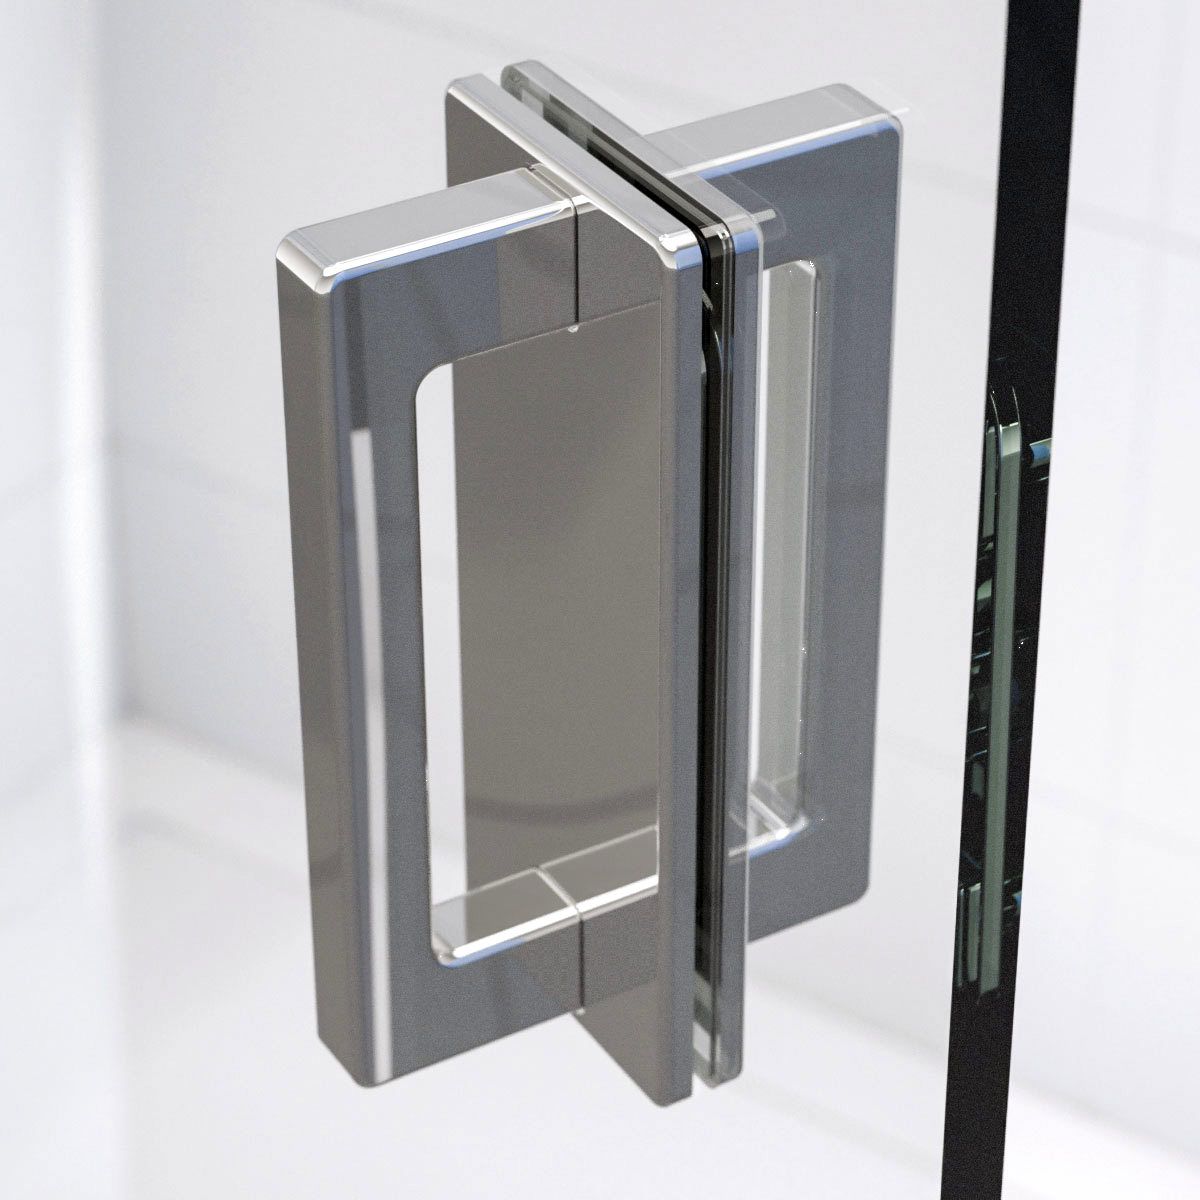 Kudos Pinnacle 8 Retro Fit Shower Door Handle for Centre Folding Doors - Chrome